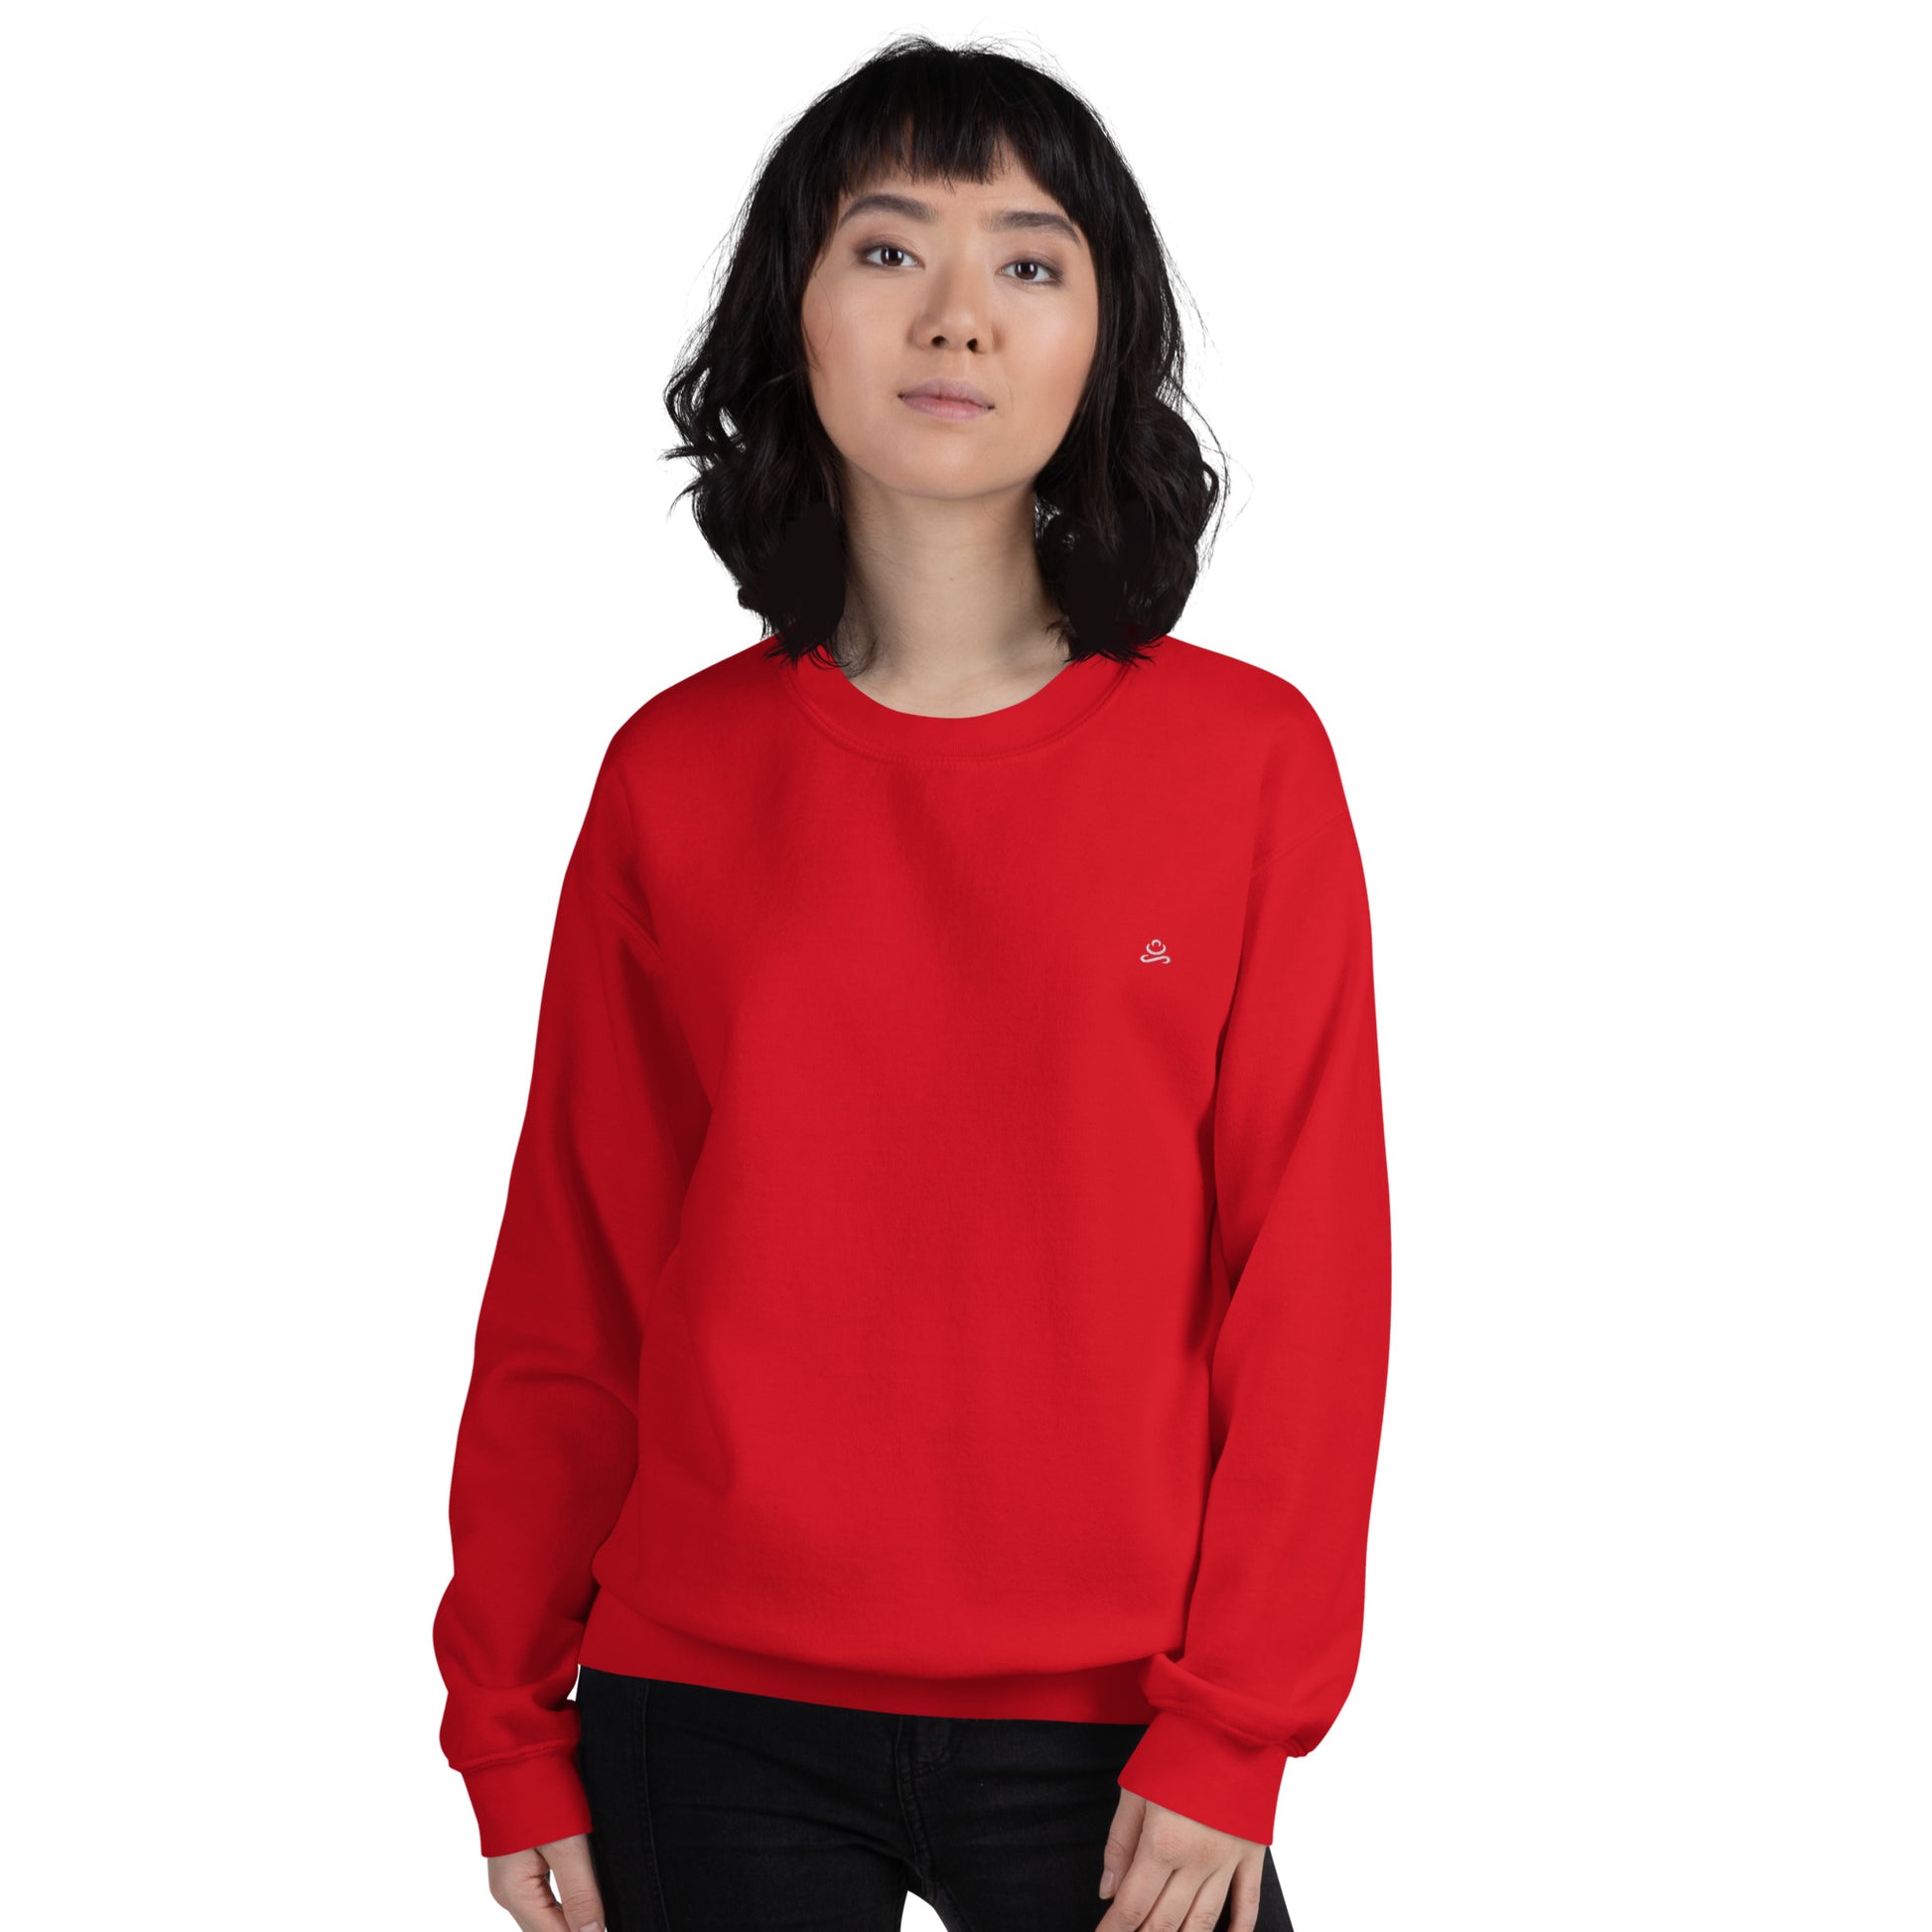 Red Women's Cotton Sweatshirt by Women's Cotton Sweatshirt sold by Jain Yoga